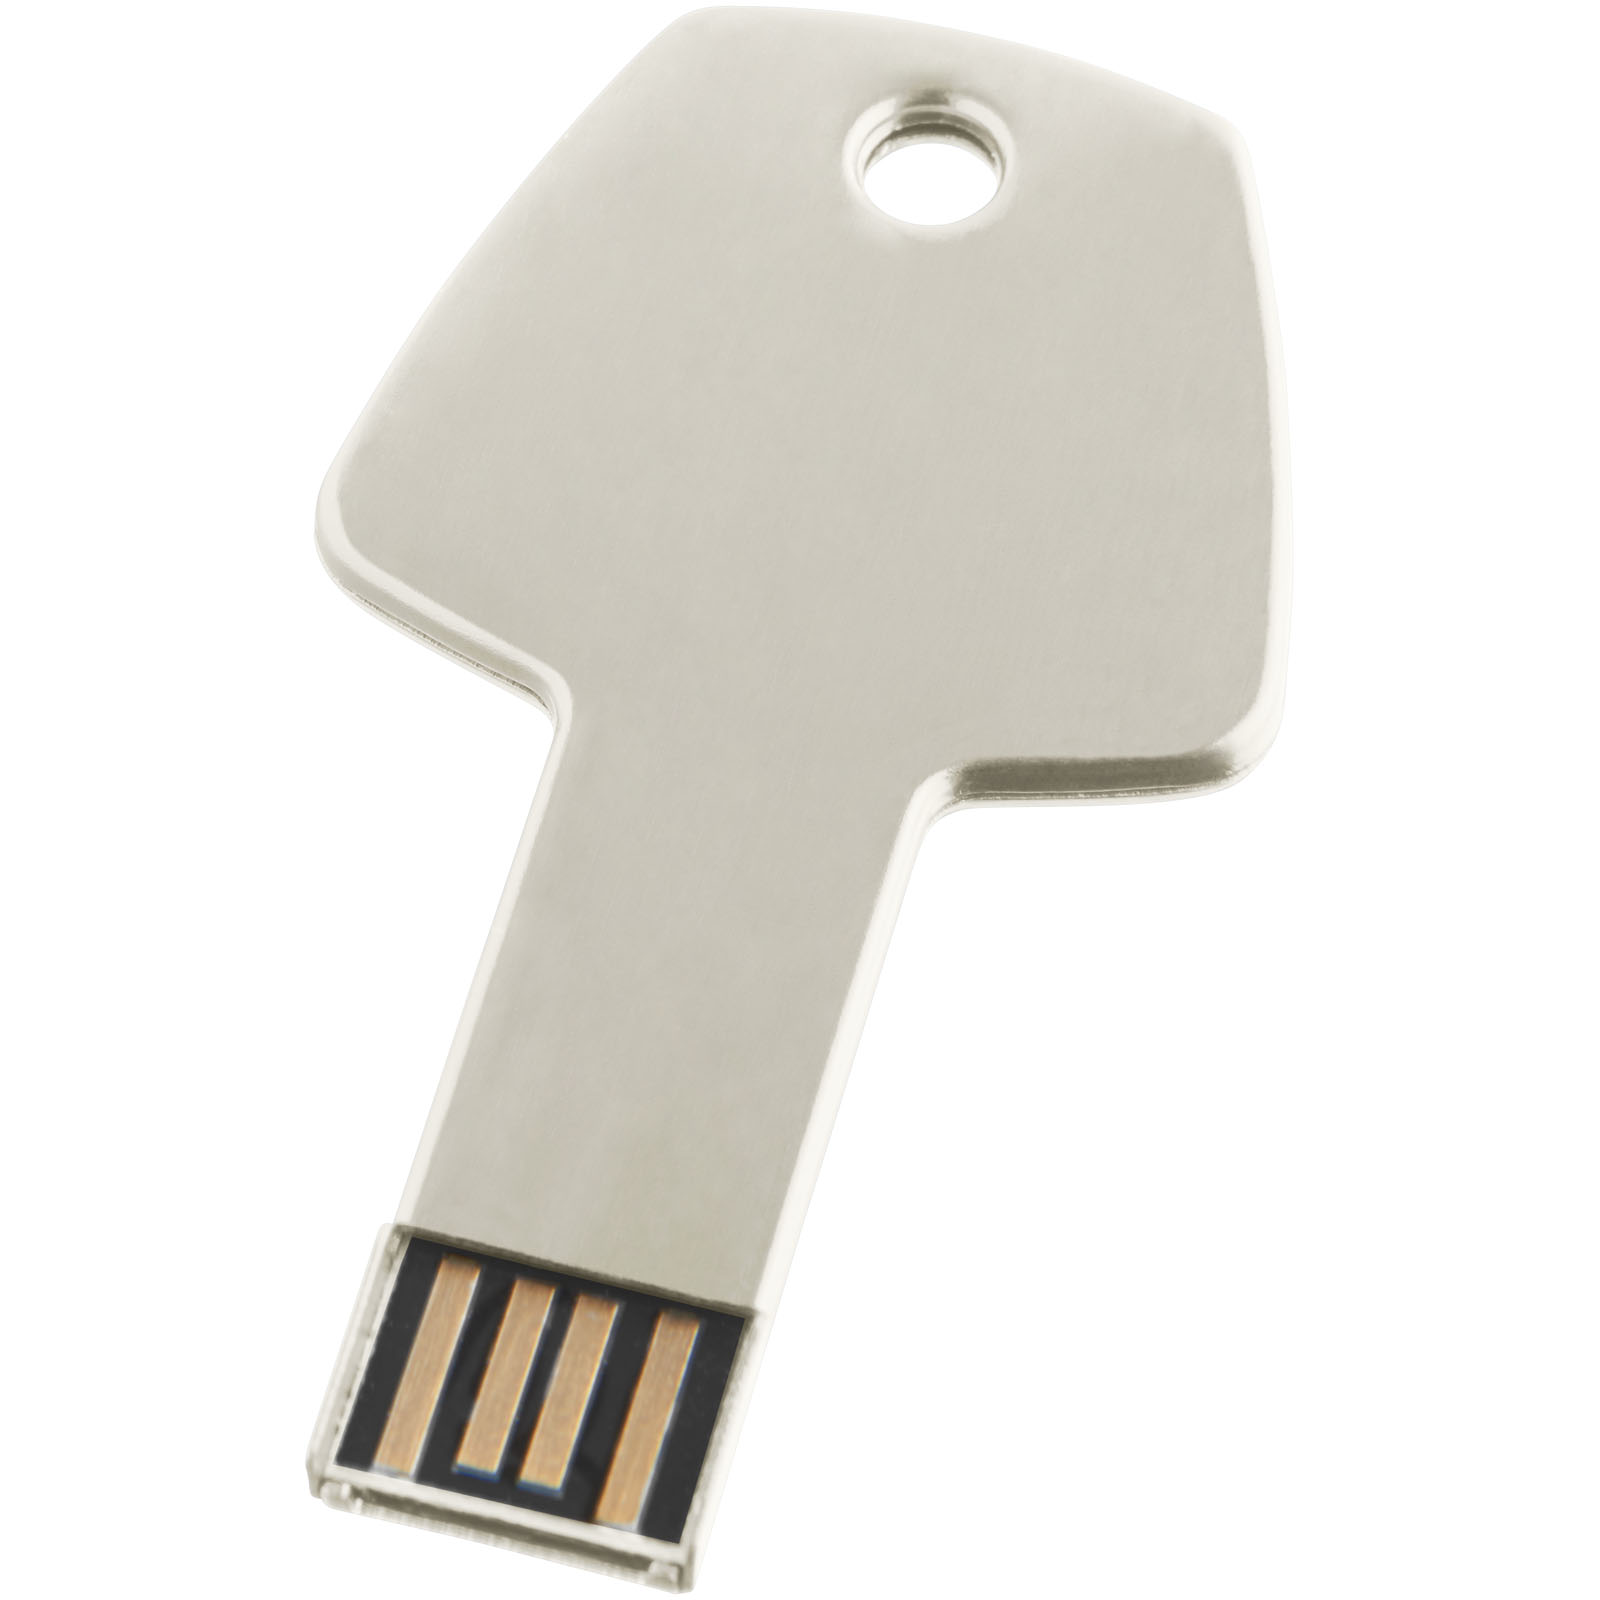 Llave USB de Aluminio - Iznate